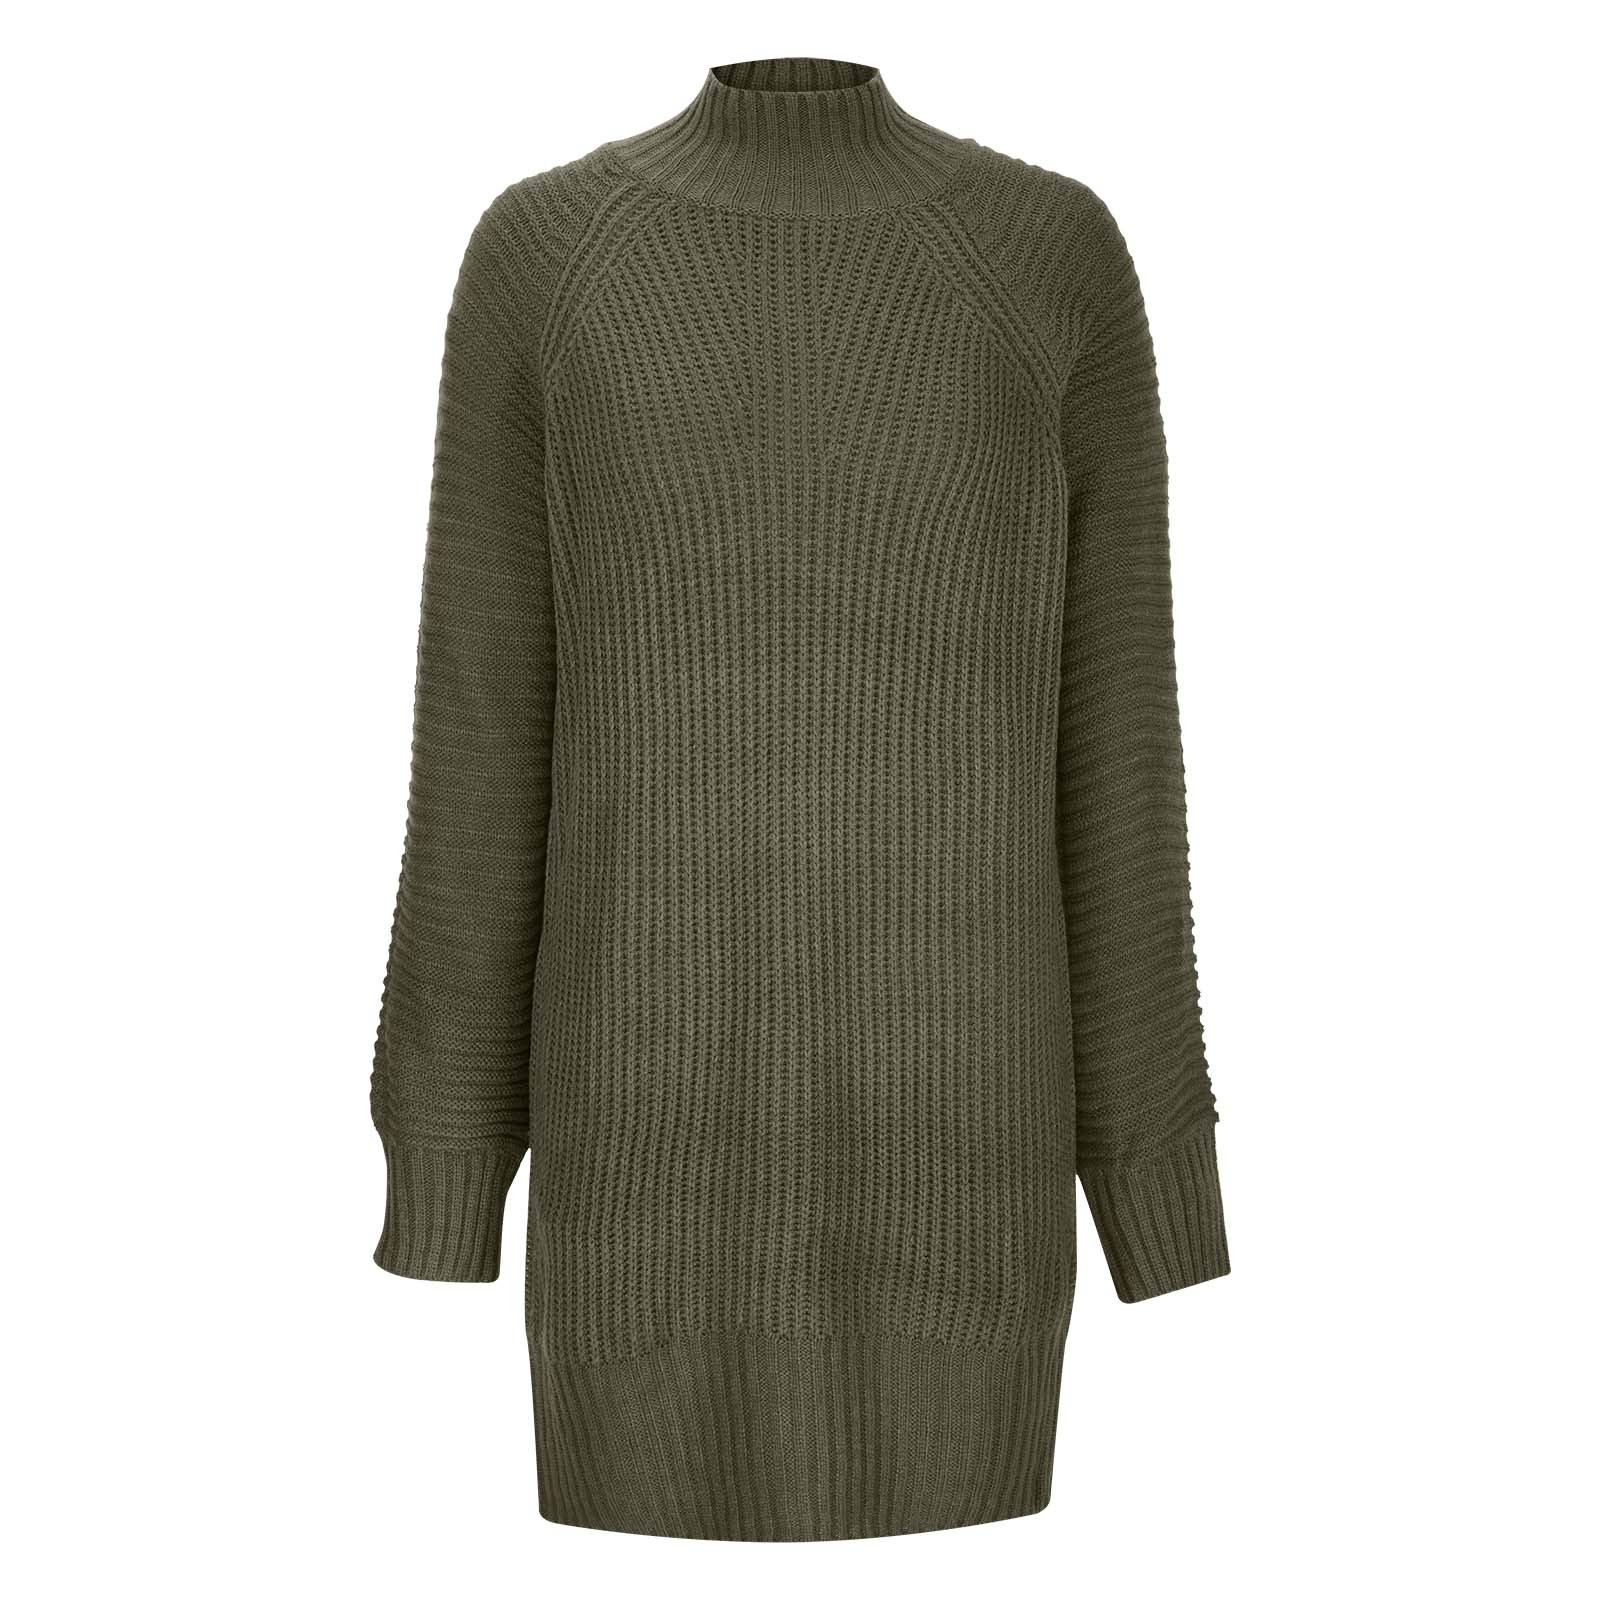 IROINNID Clearance Semi Formal Dress for Women Long Sleeve Sweater ...